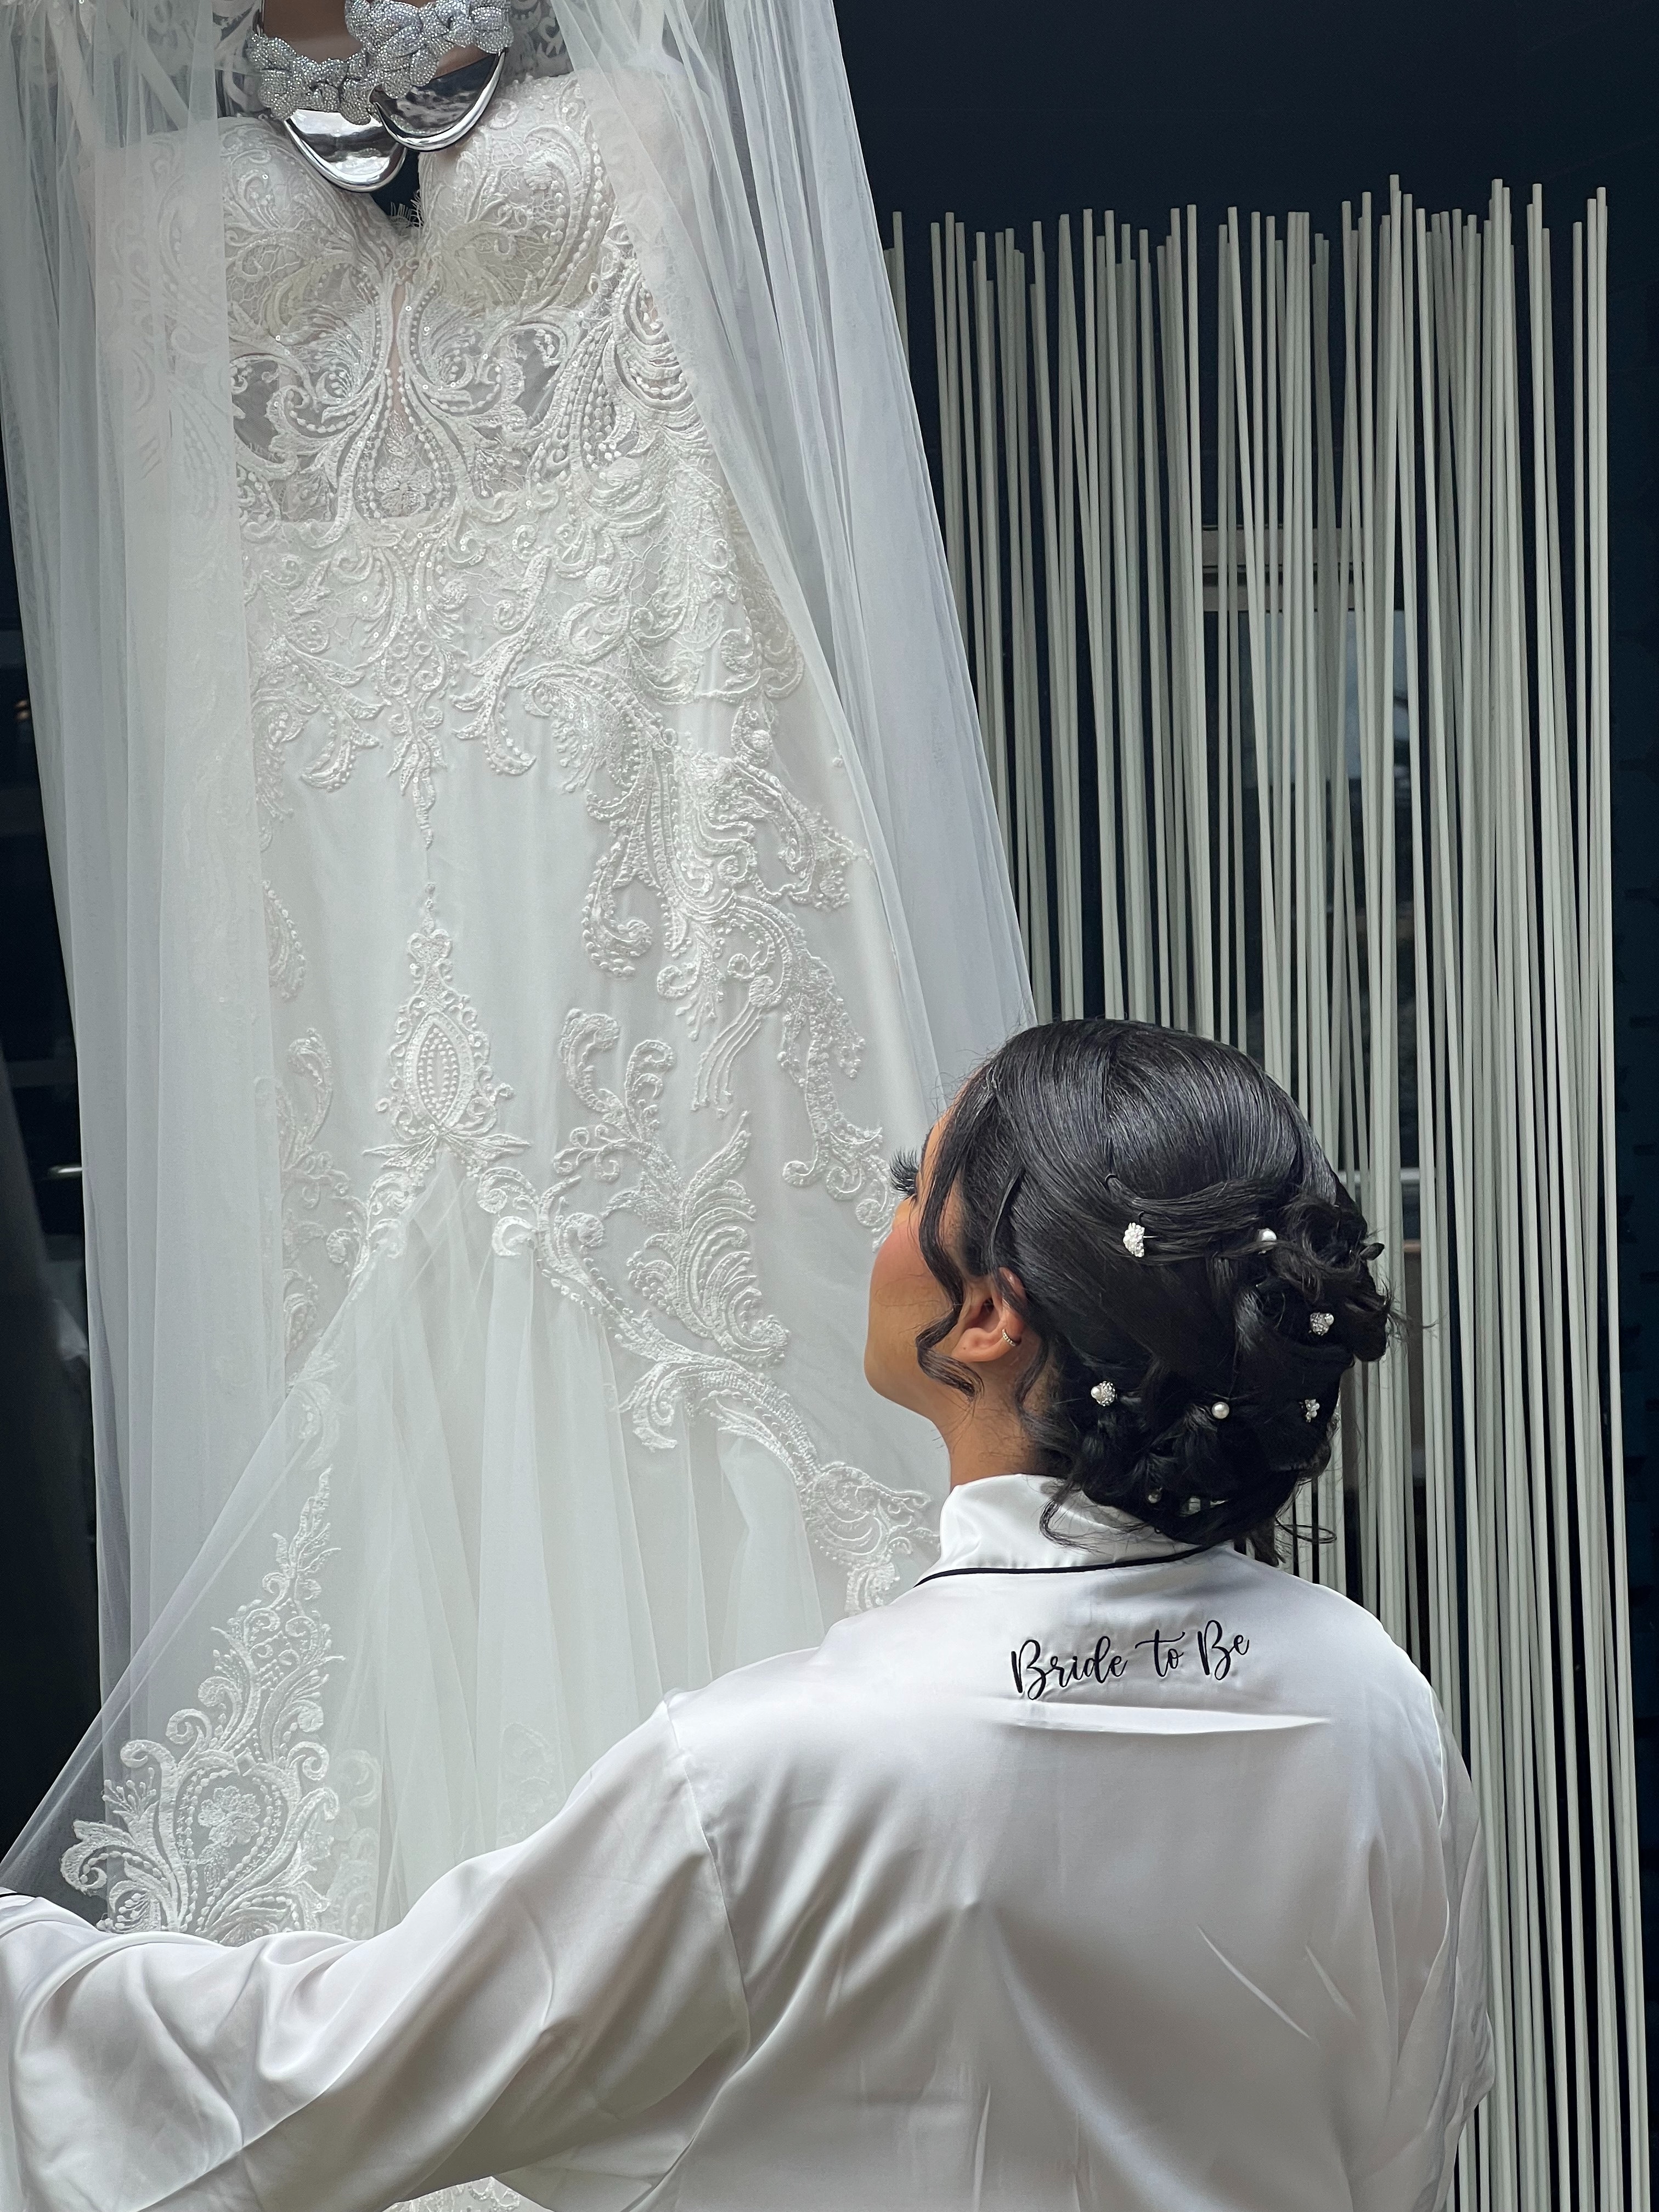 Woman looking at wedding dress | Source: Pexels